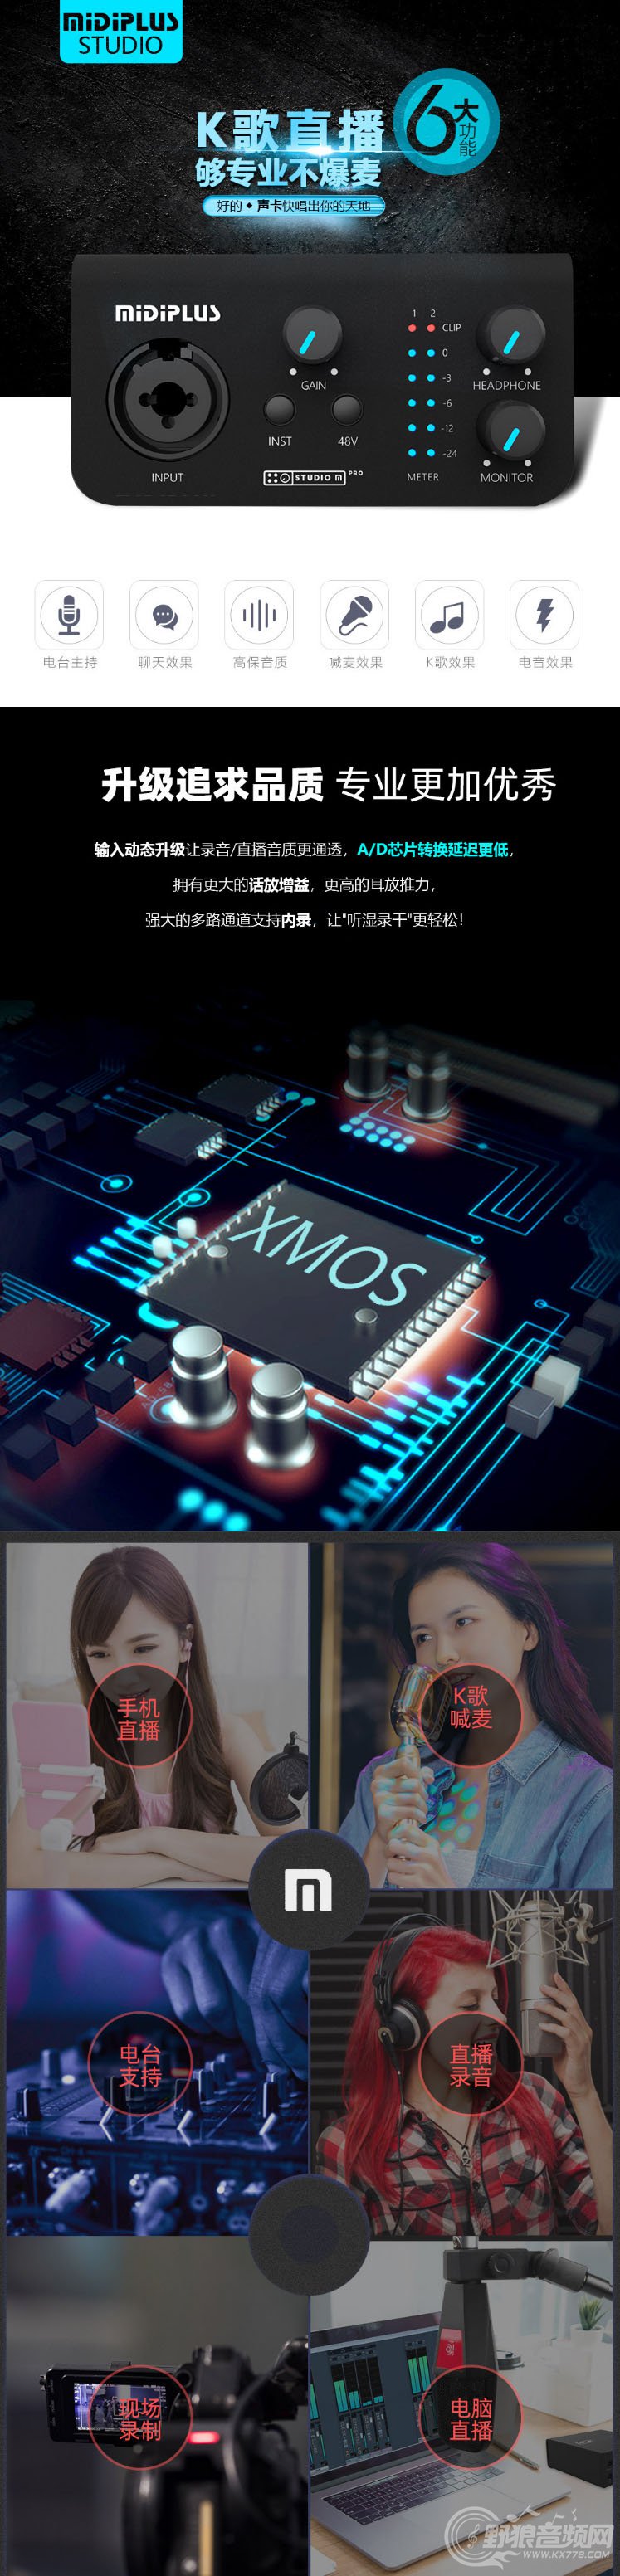 midiplus studio m pro 外置声卡套装USB直播录音声卡